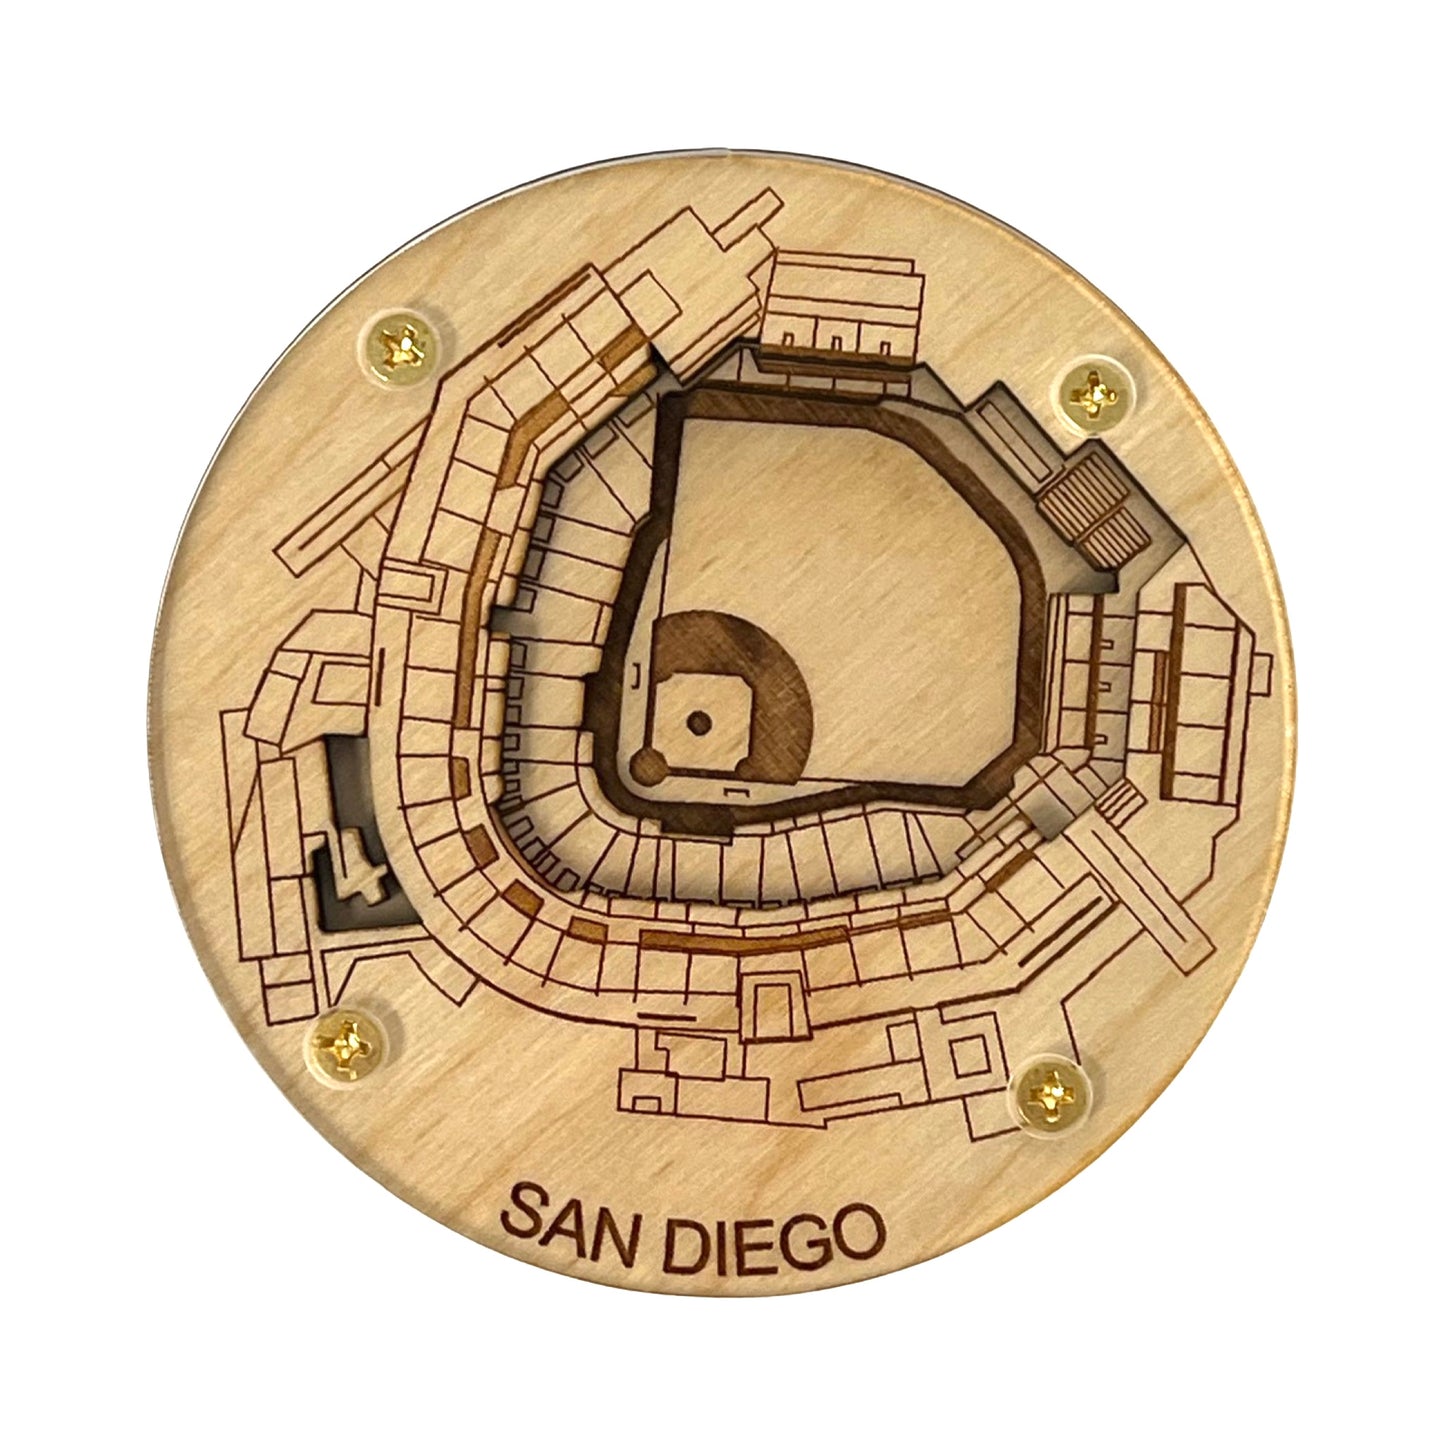 San Diego, California Coaster Art (Petco Park)